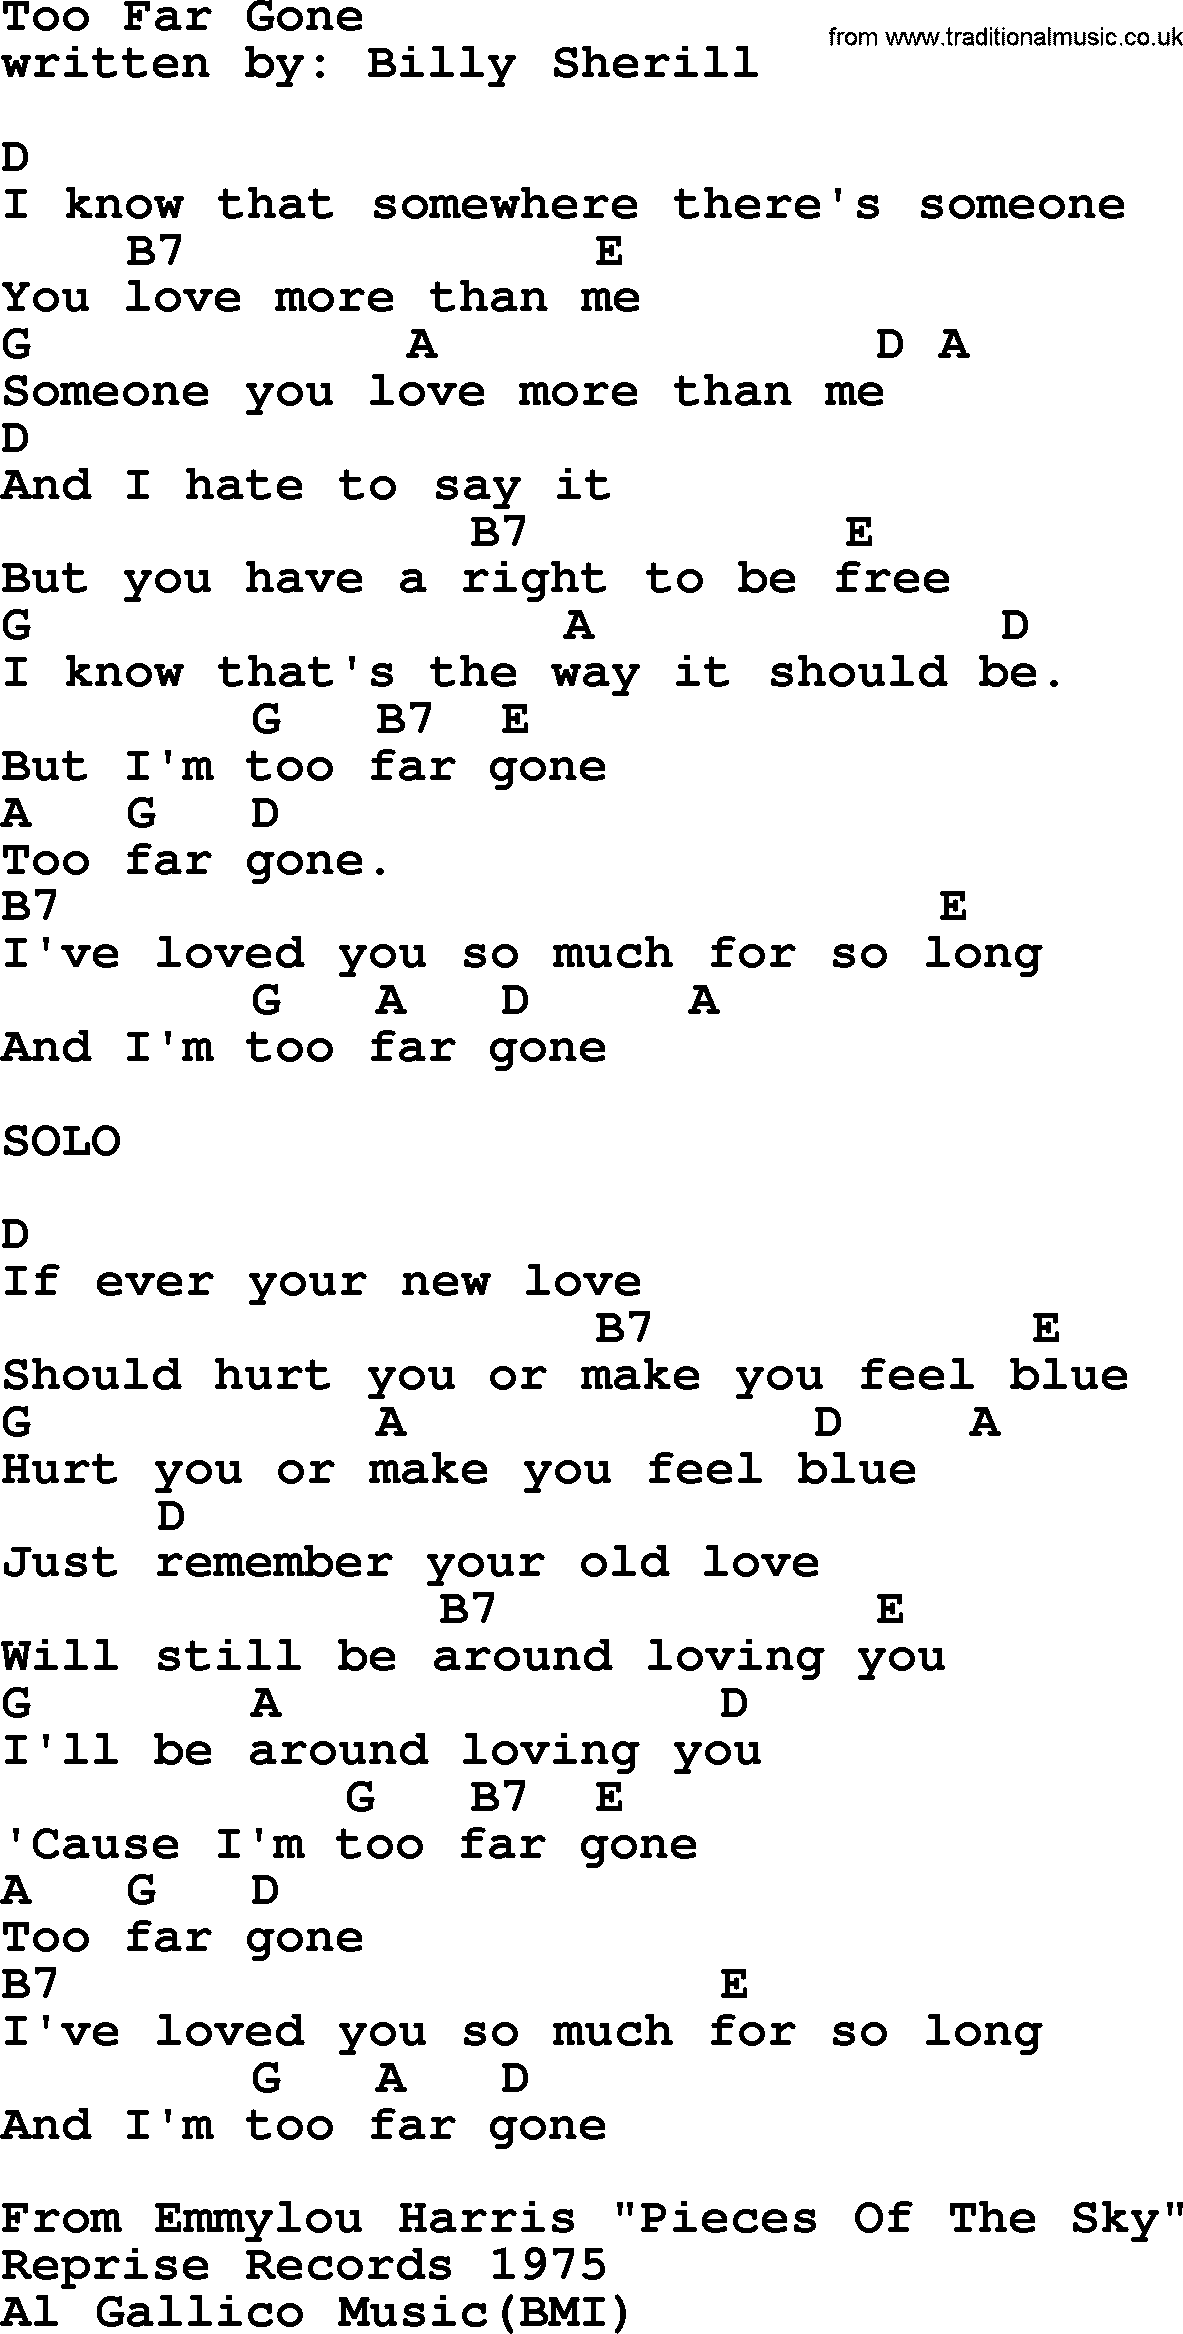 Emmylou Harris song: Too Far Gone lyrics and chords